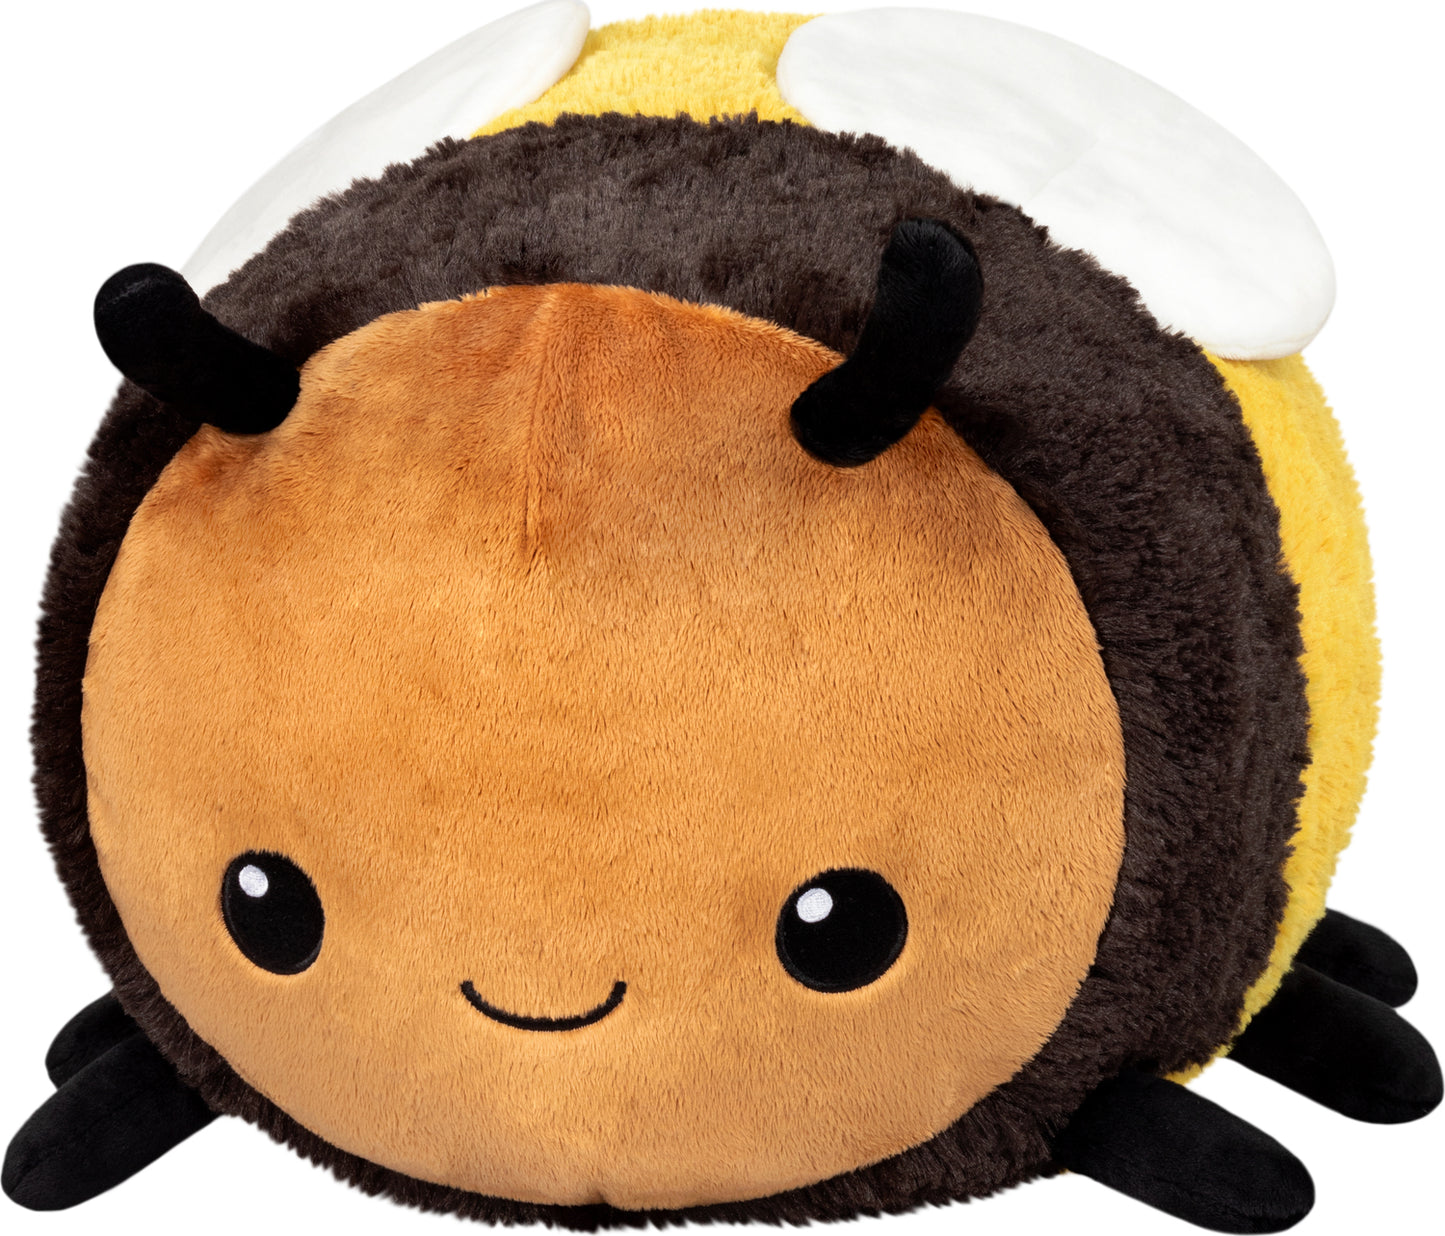 Squishable Fuzzy Bumblebee (15")